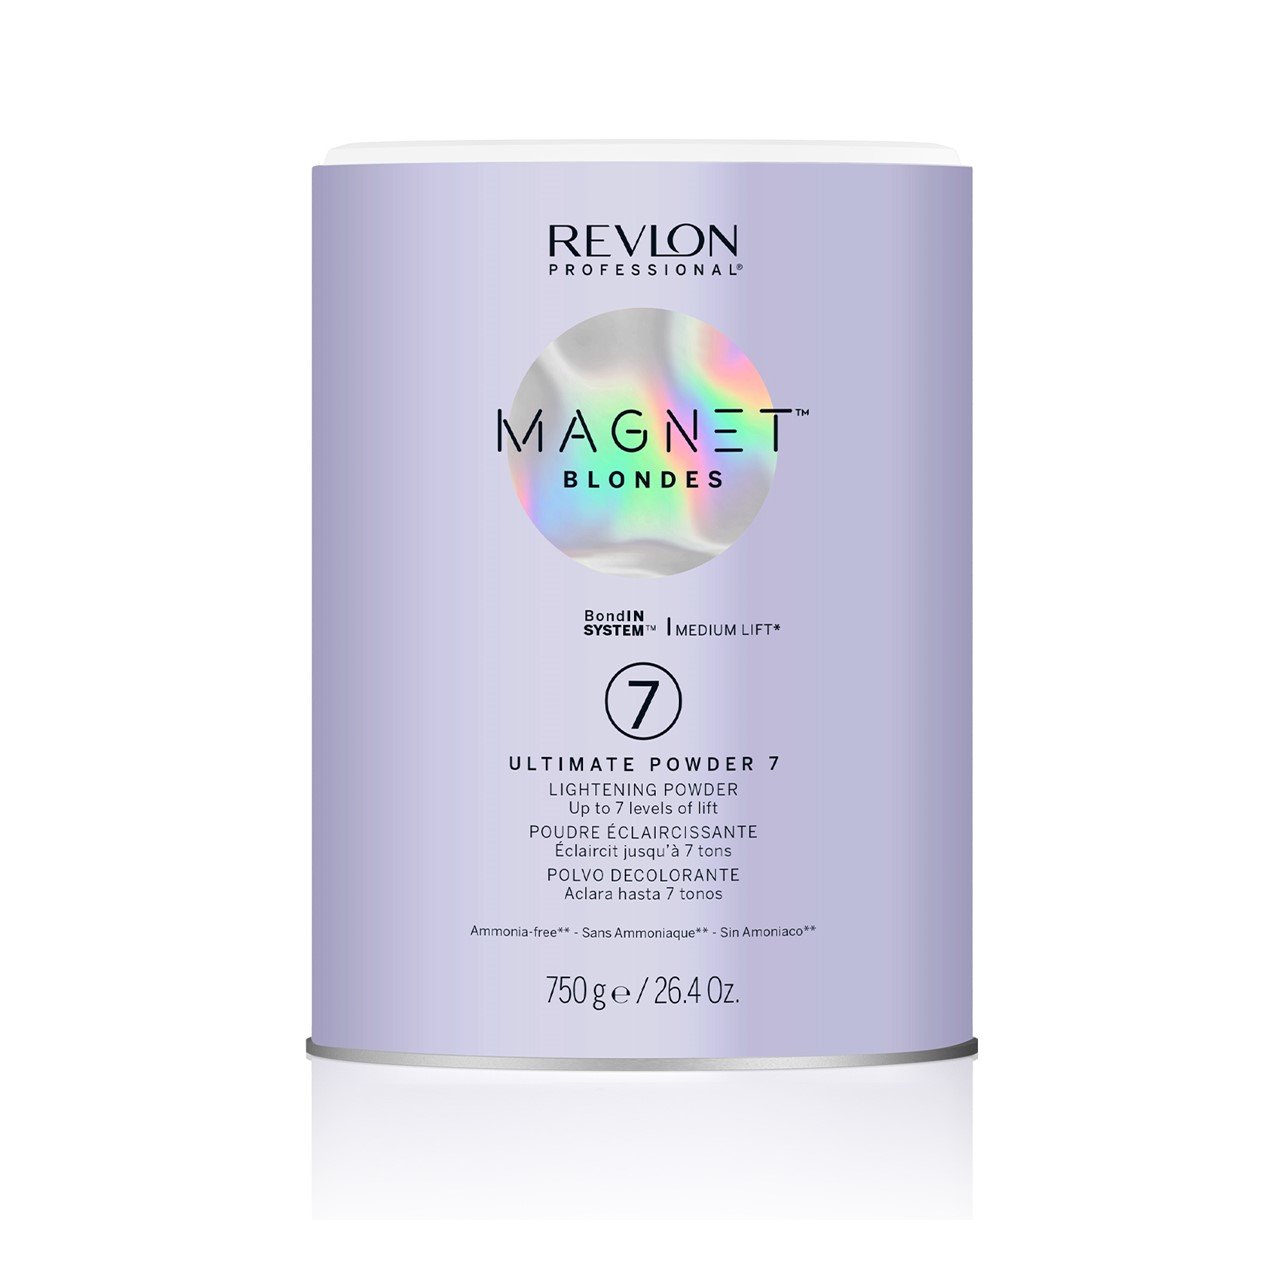 Revlon Professional Magnet Blondes Ultimate Powder 7 750g